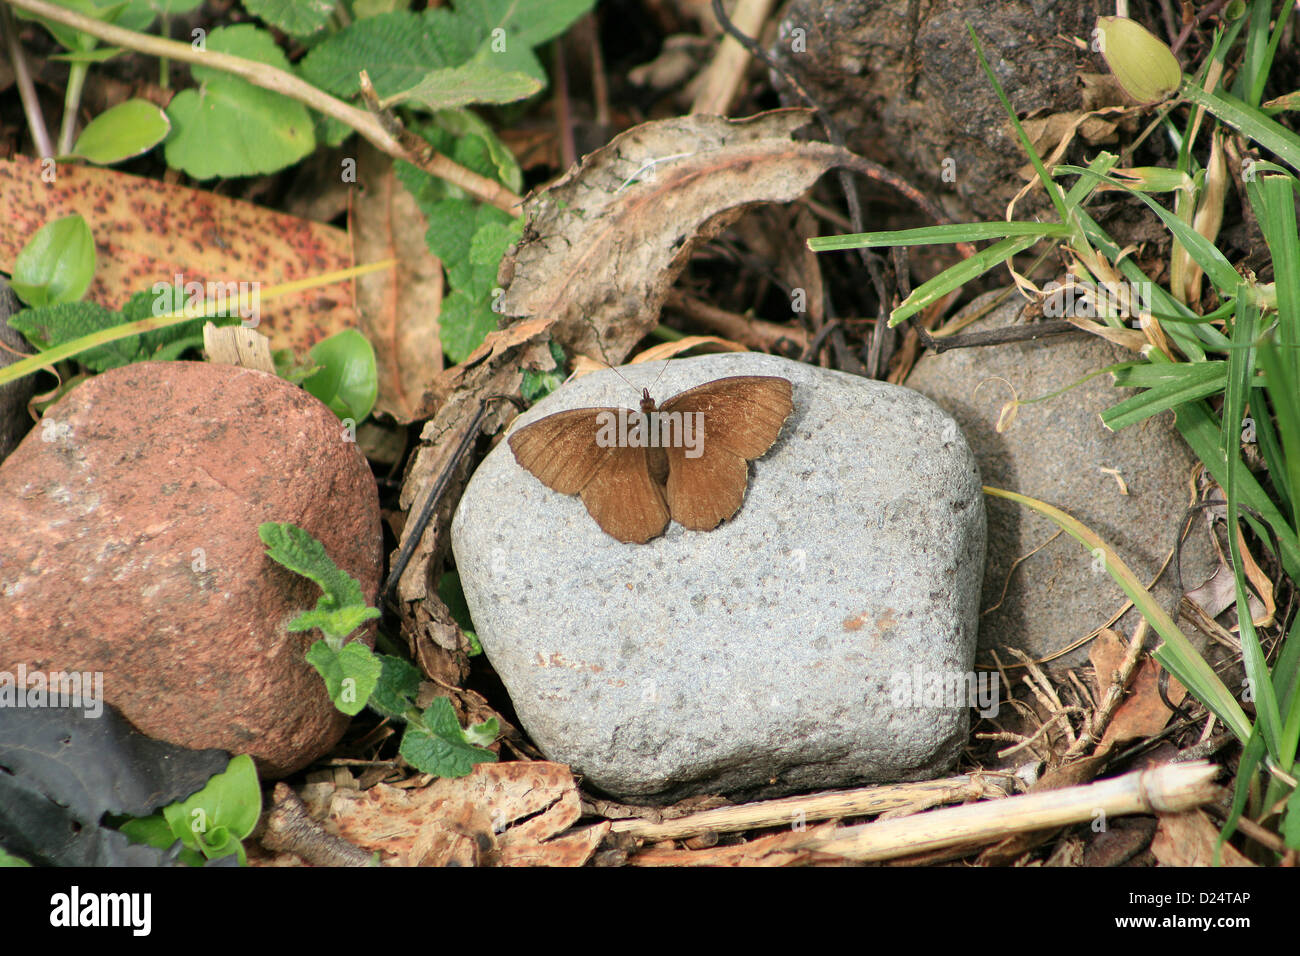 A small brown butterfly sitting on a rock in a garden at the Peguche Falls near Otavalo, Ecuador Stock Photo